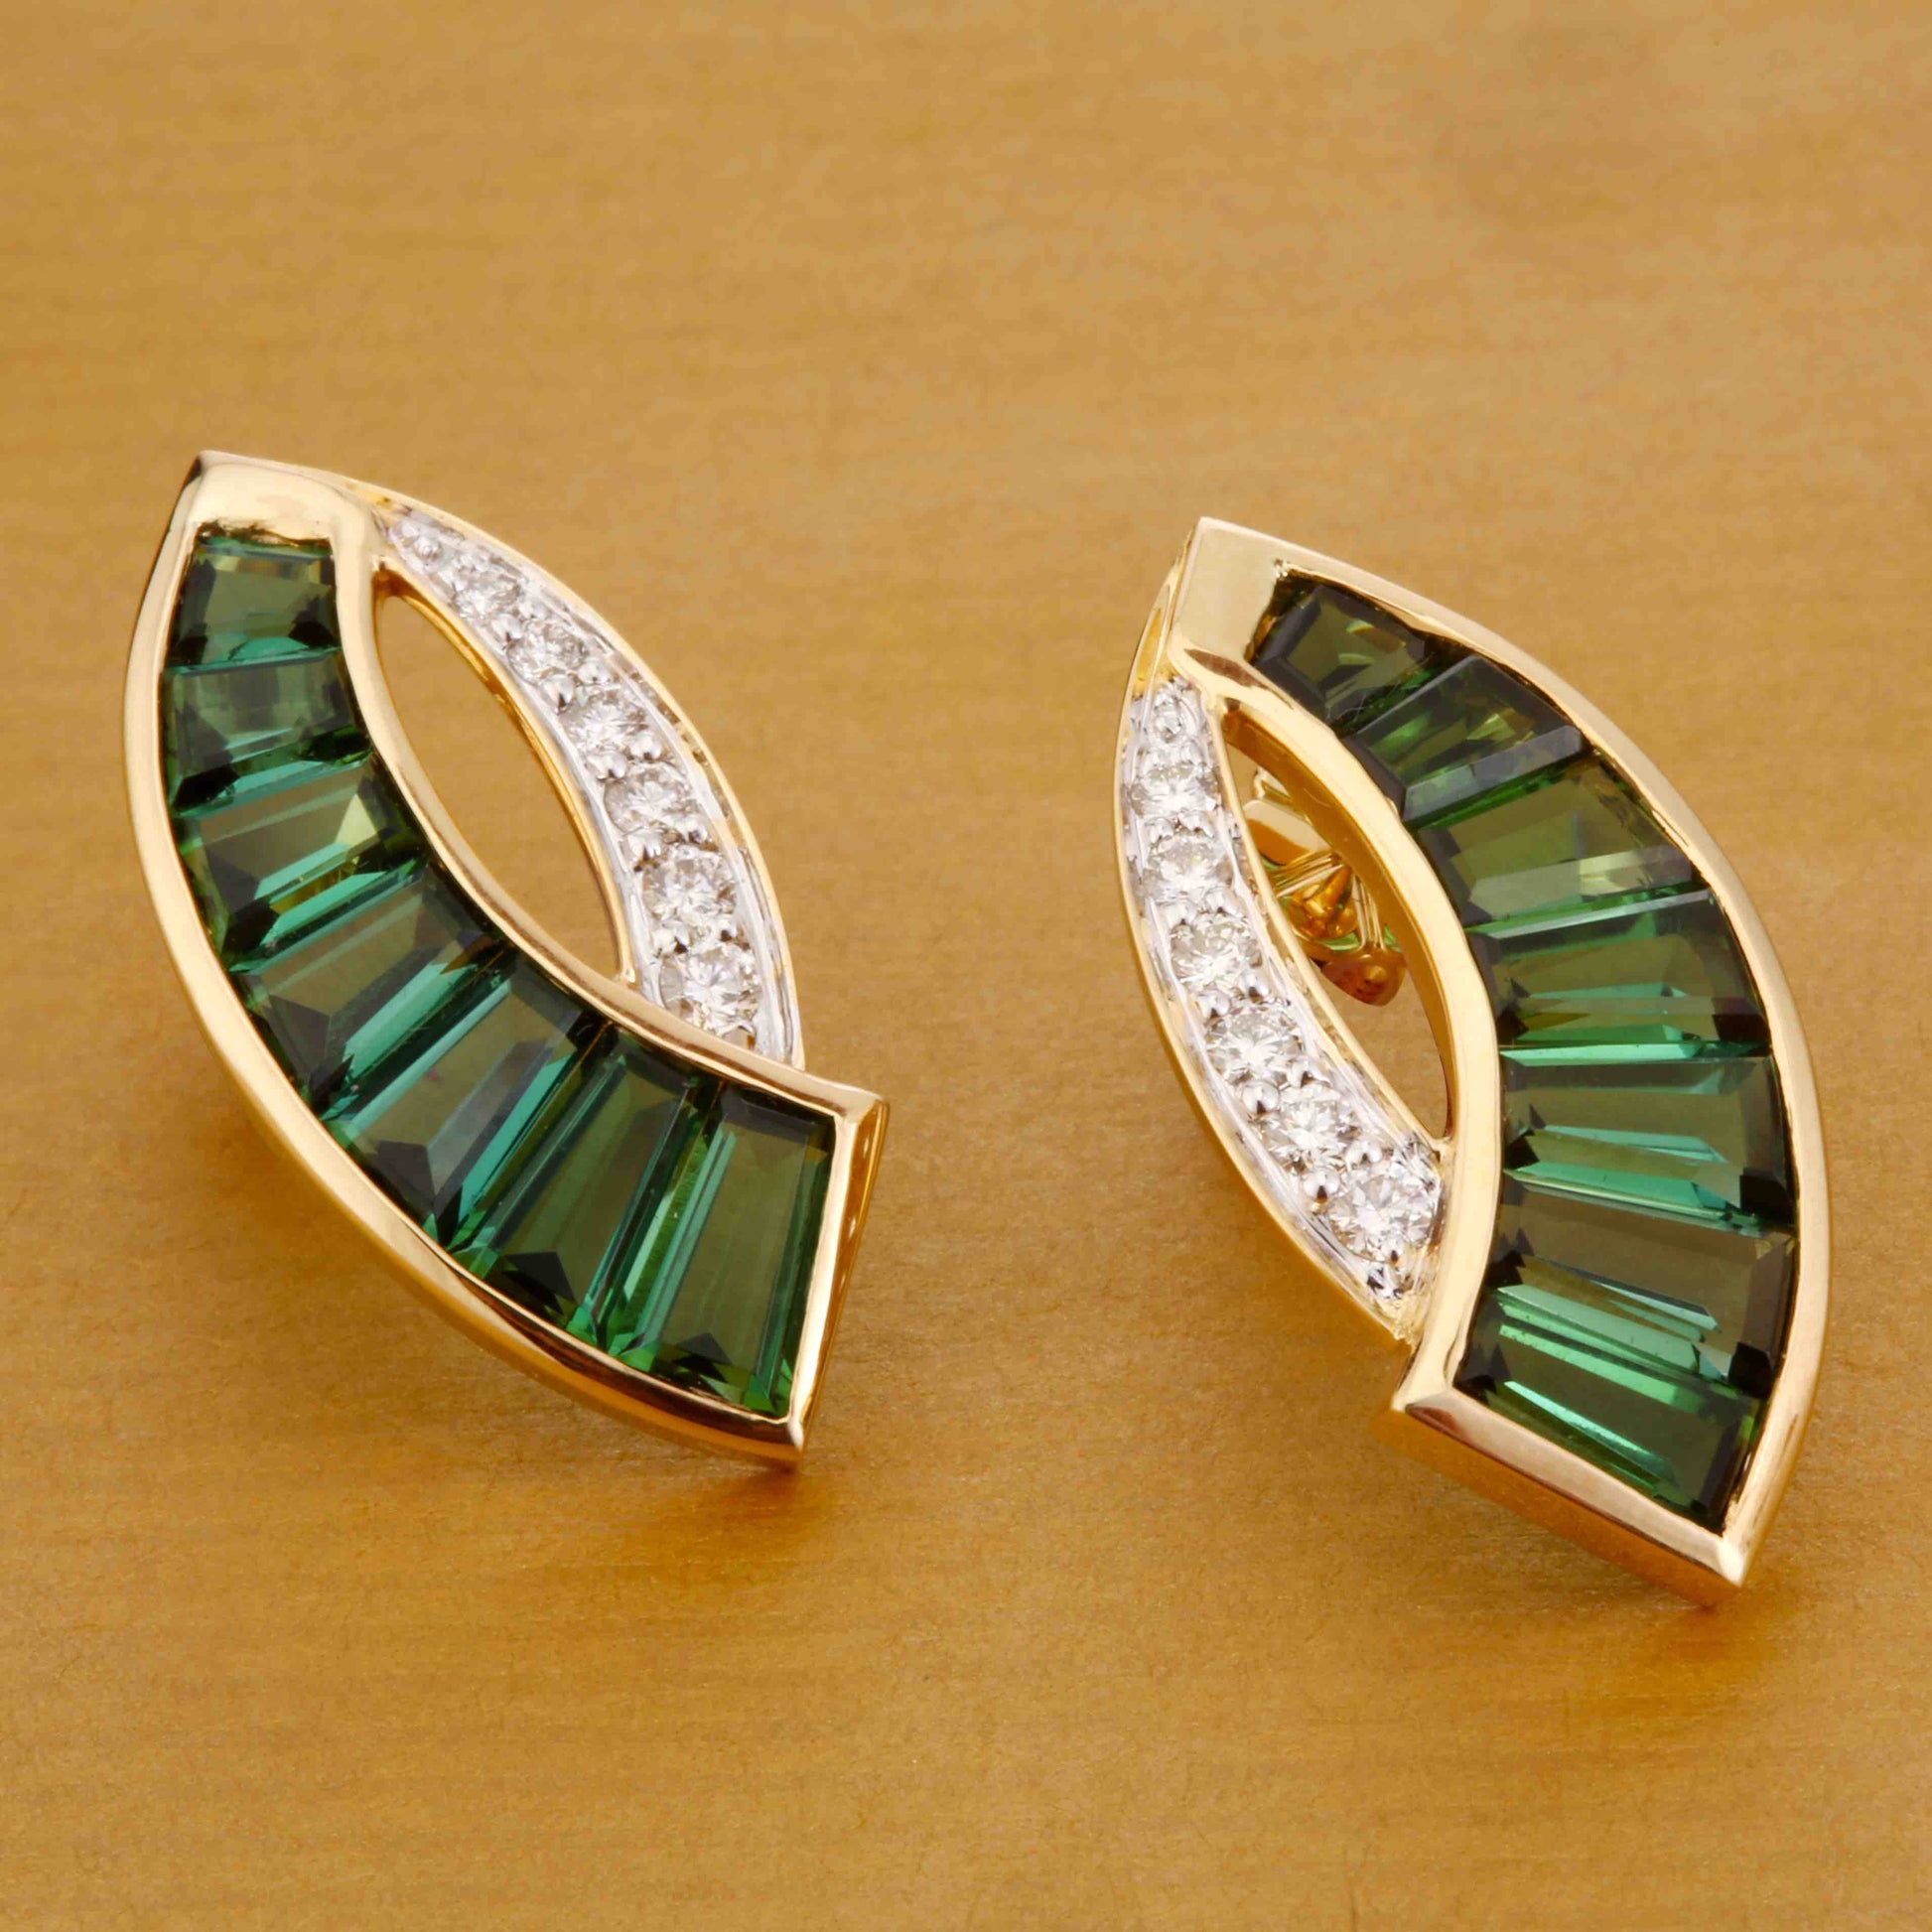 18K Gold Green Tourmaline Baguette Diamond Sword Earrings - Vaibhav Dhadda Jewelry